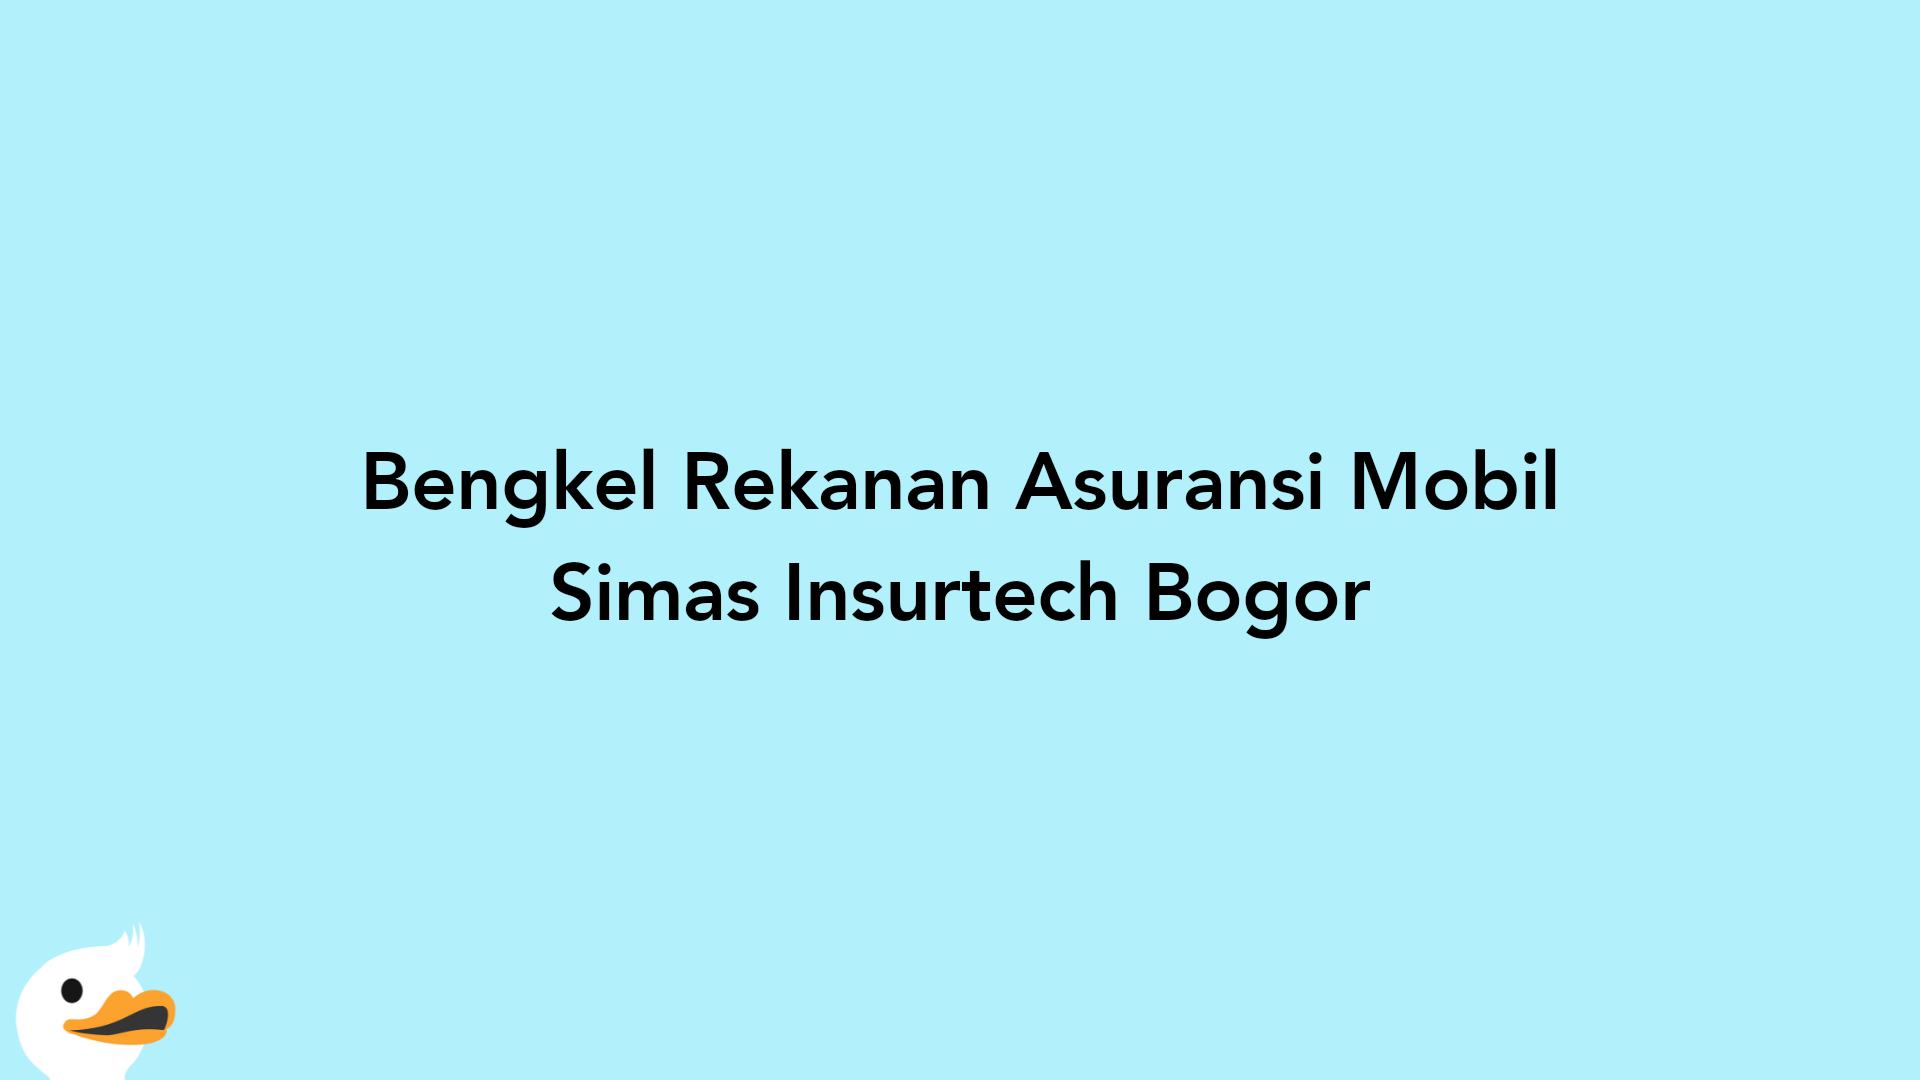 Bengkel Rekanan Asuransi Mobil Simas Insurtech Bogor